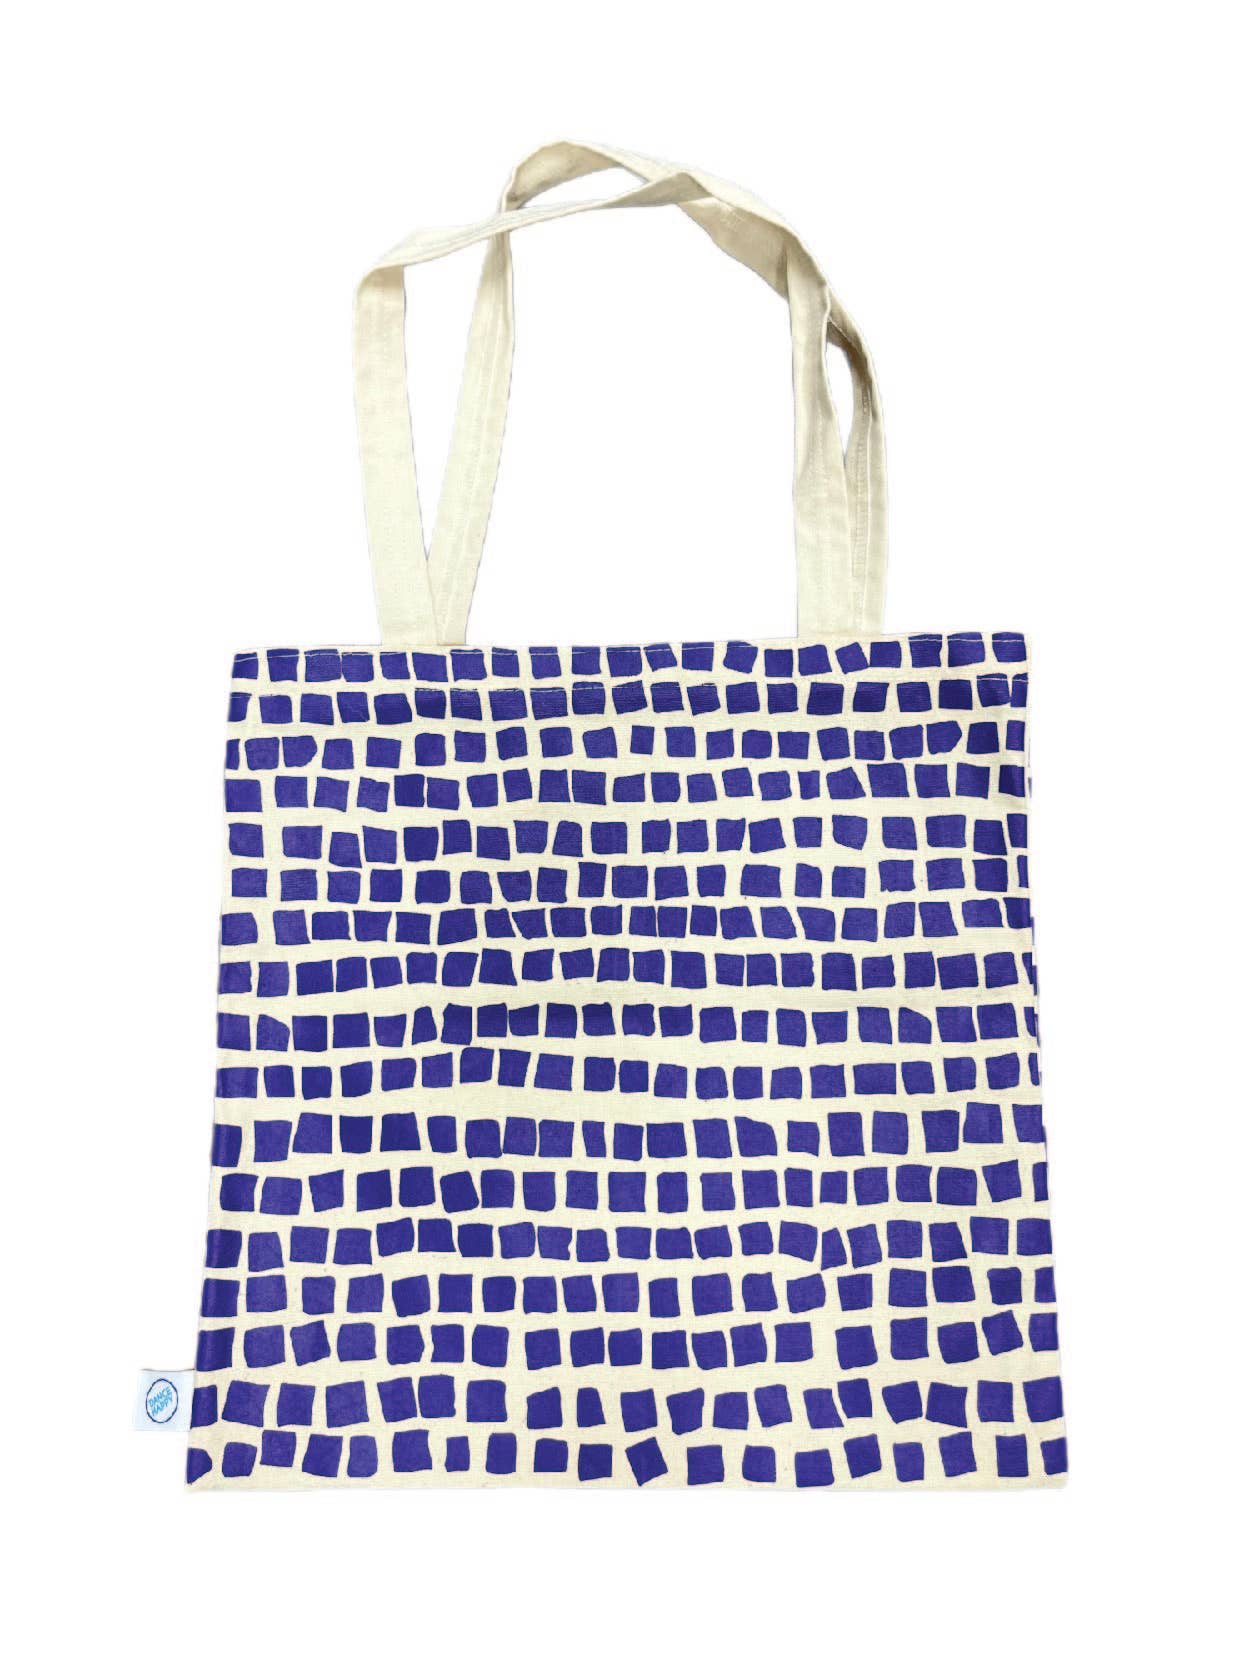 Fair Trade flat tote (Squares) - Royal Purple